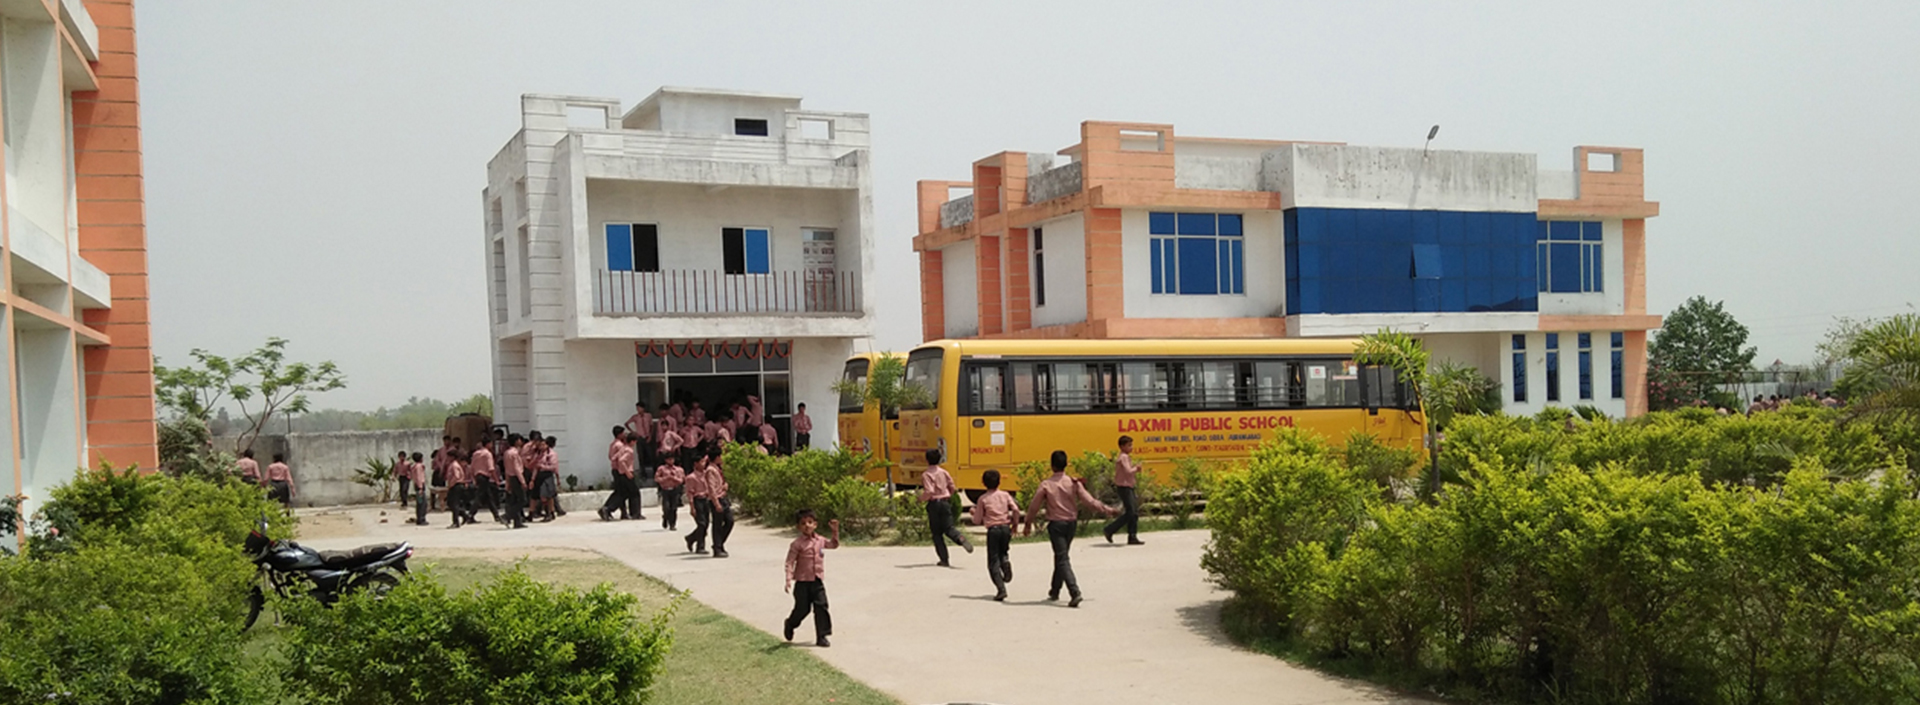 Laxmi Public School Education | Schools